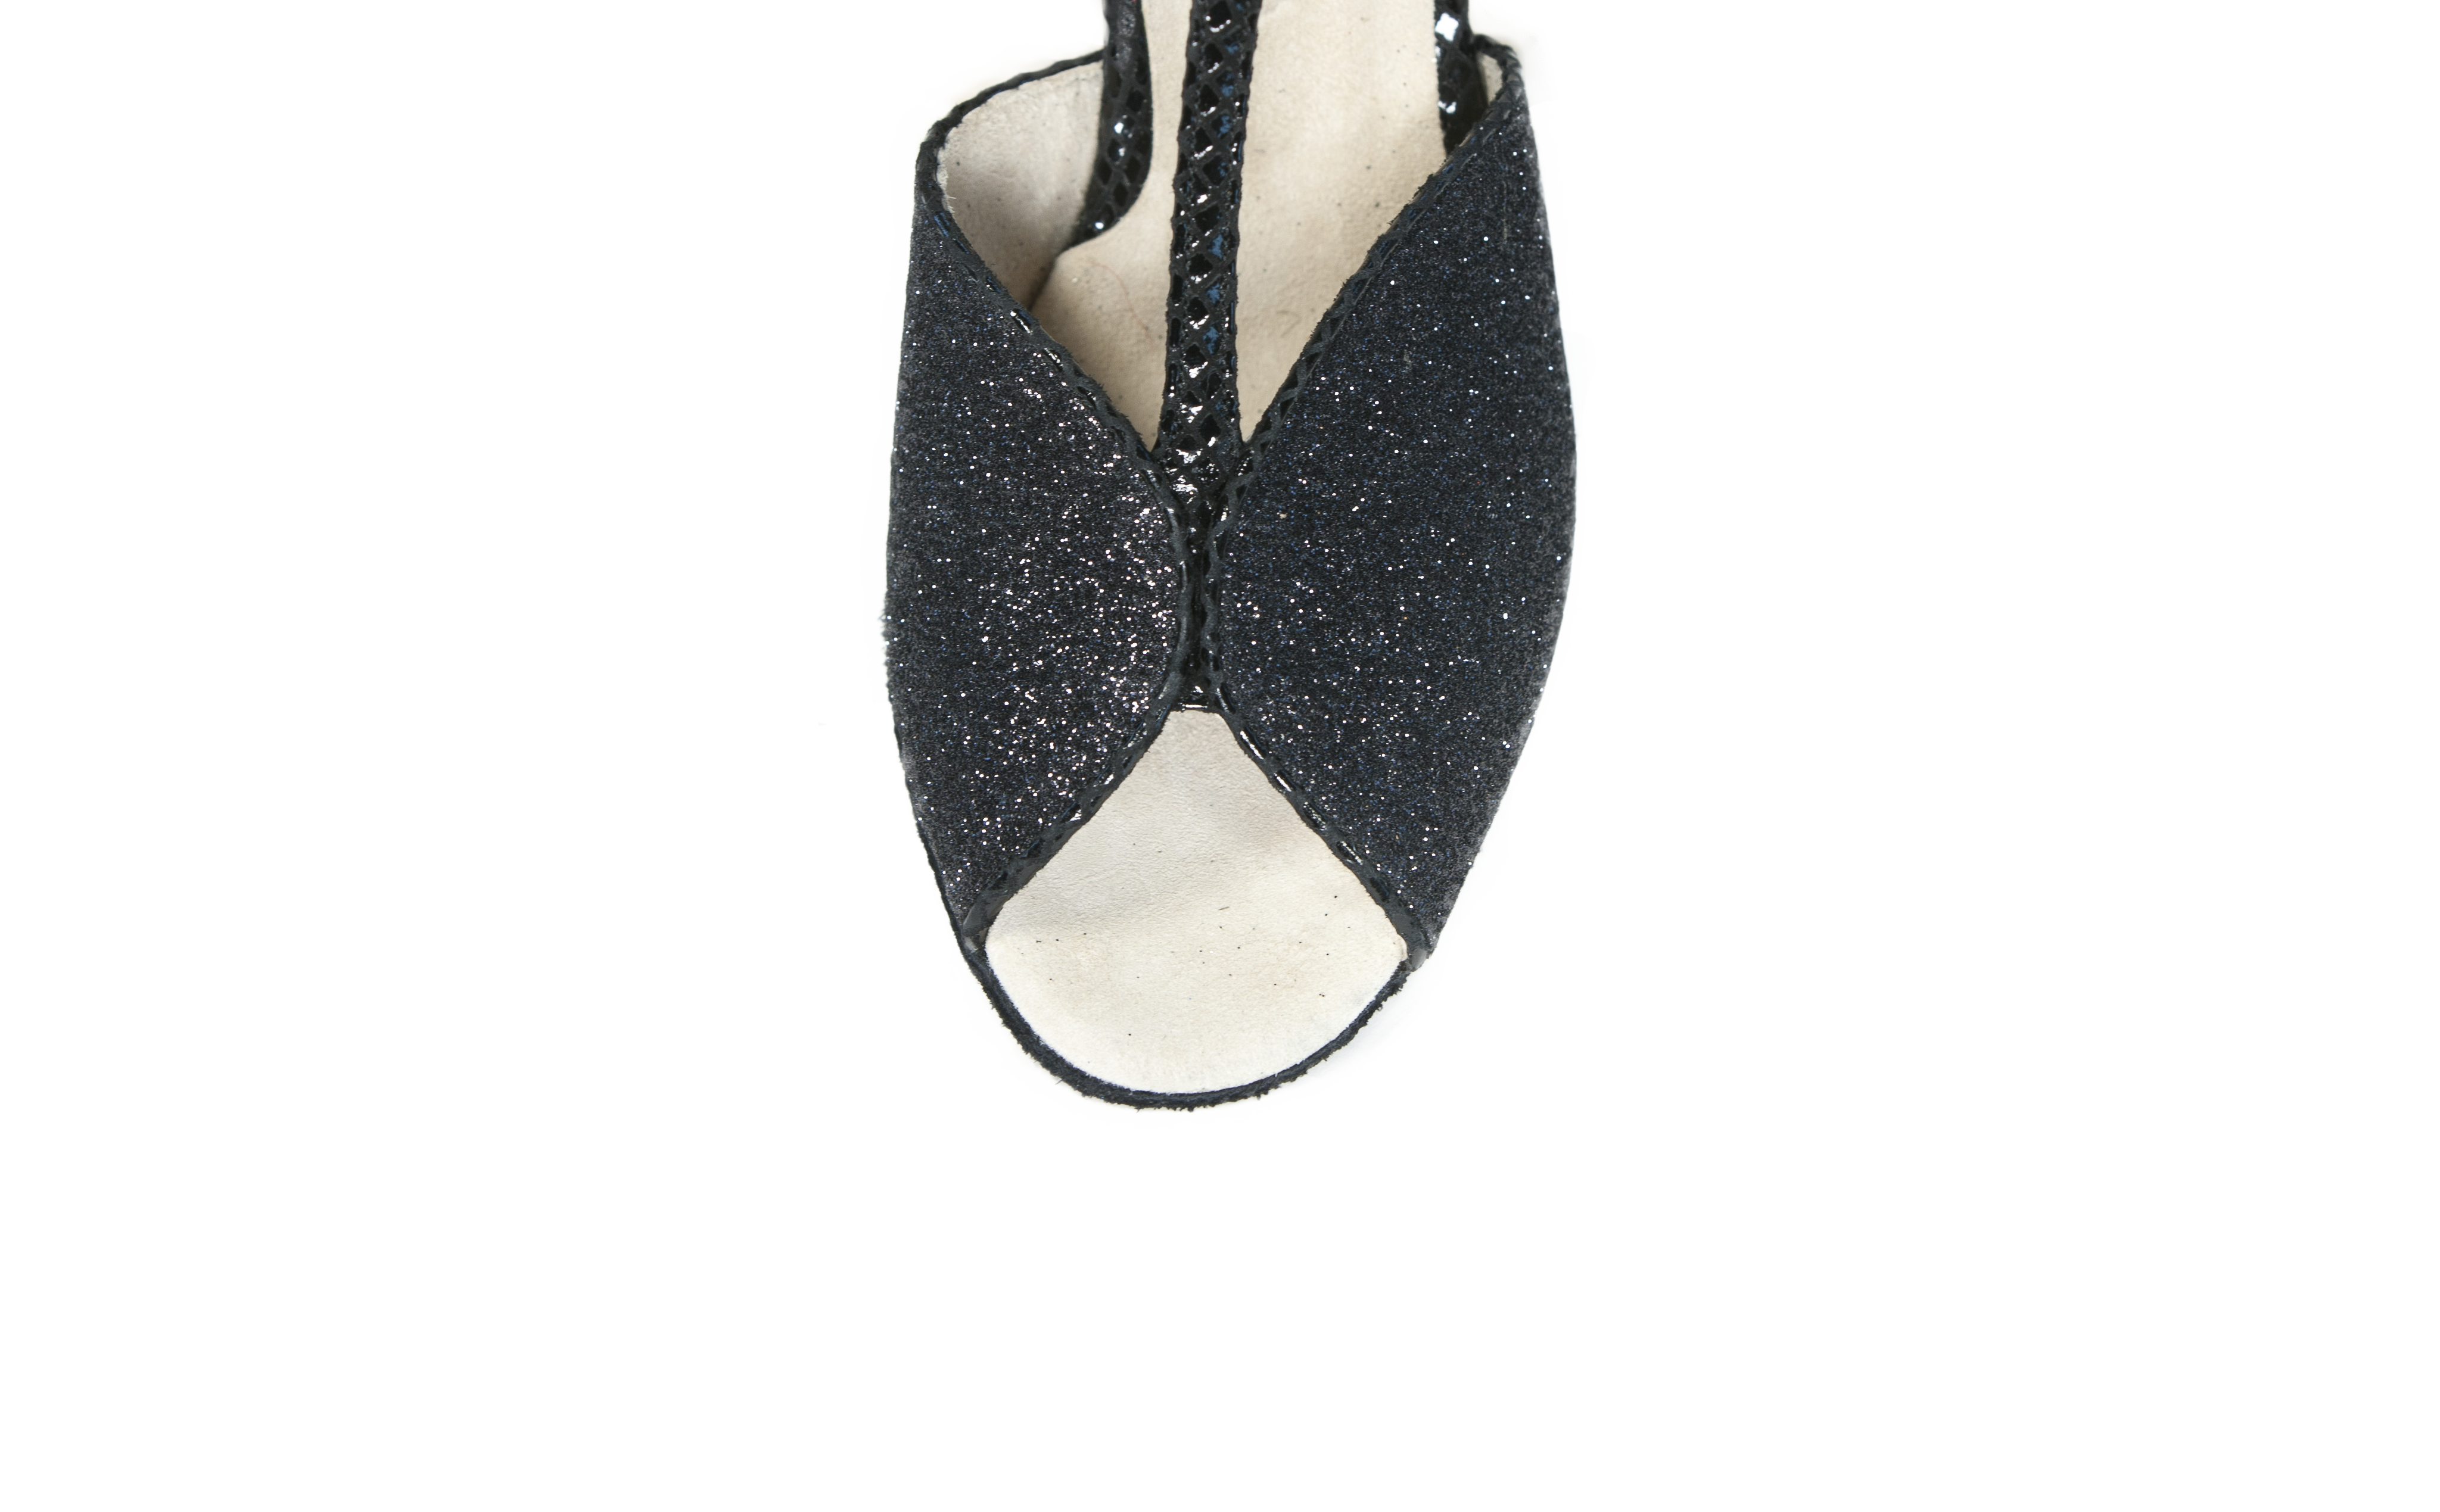 Display of open toe & glittery Megan Black Ladies Social Dance Shoes 